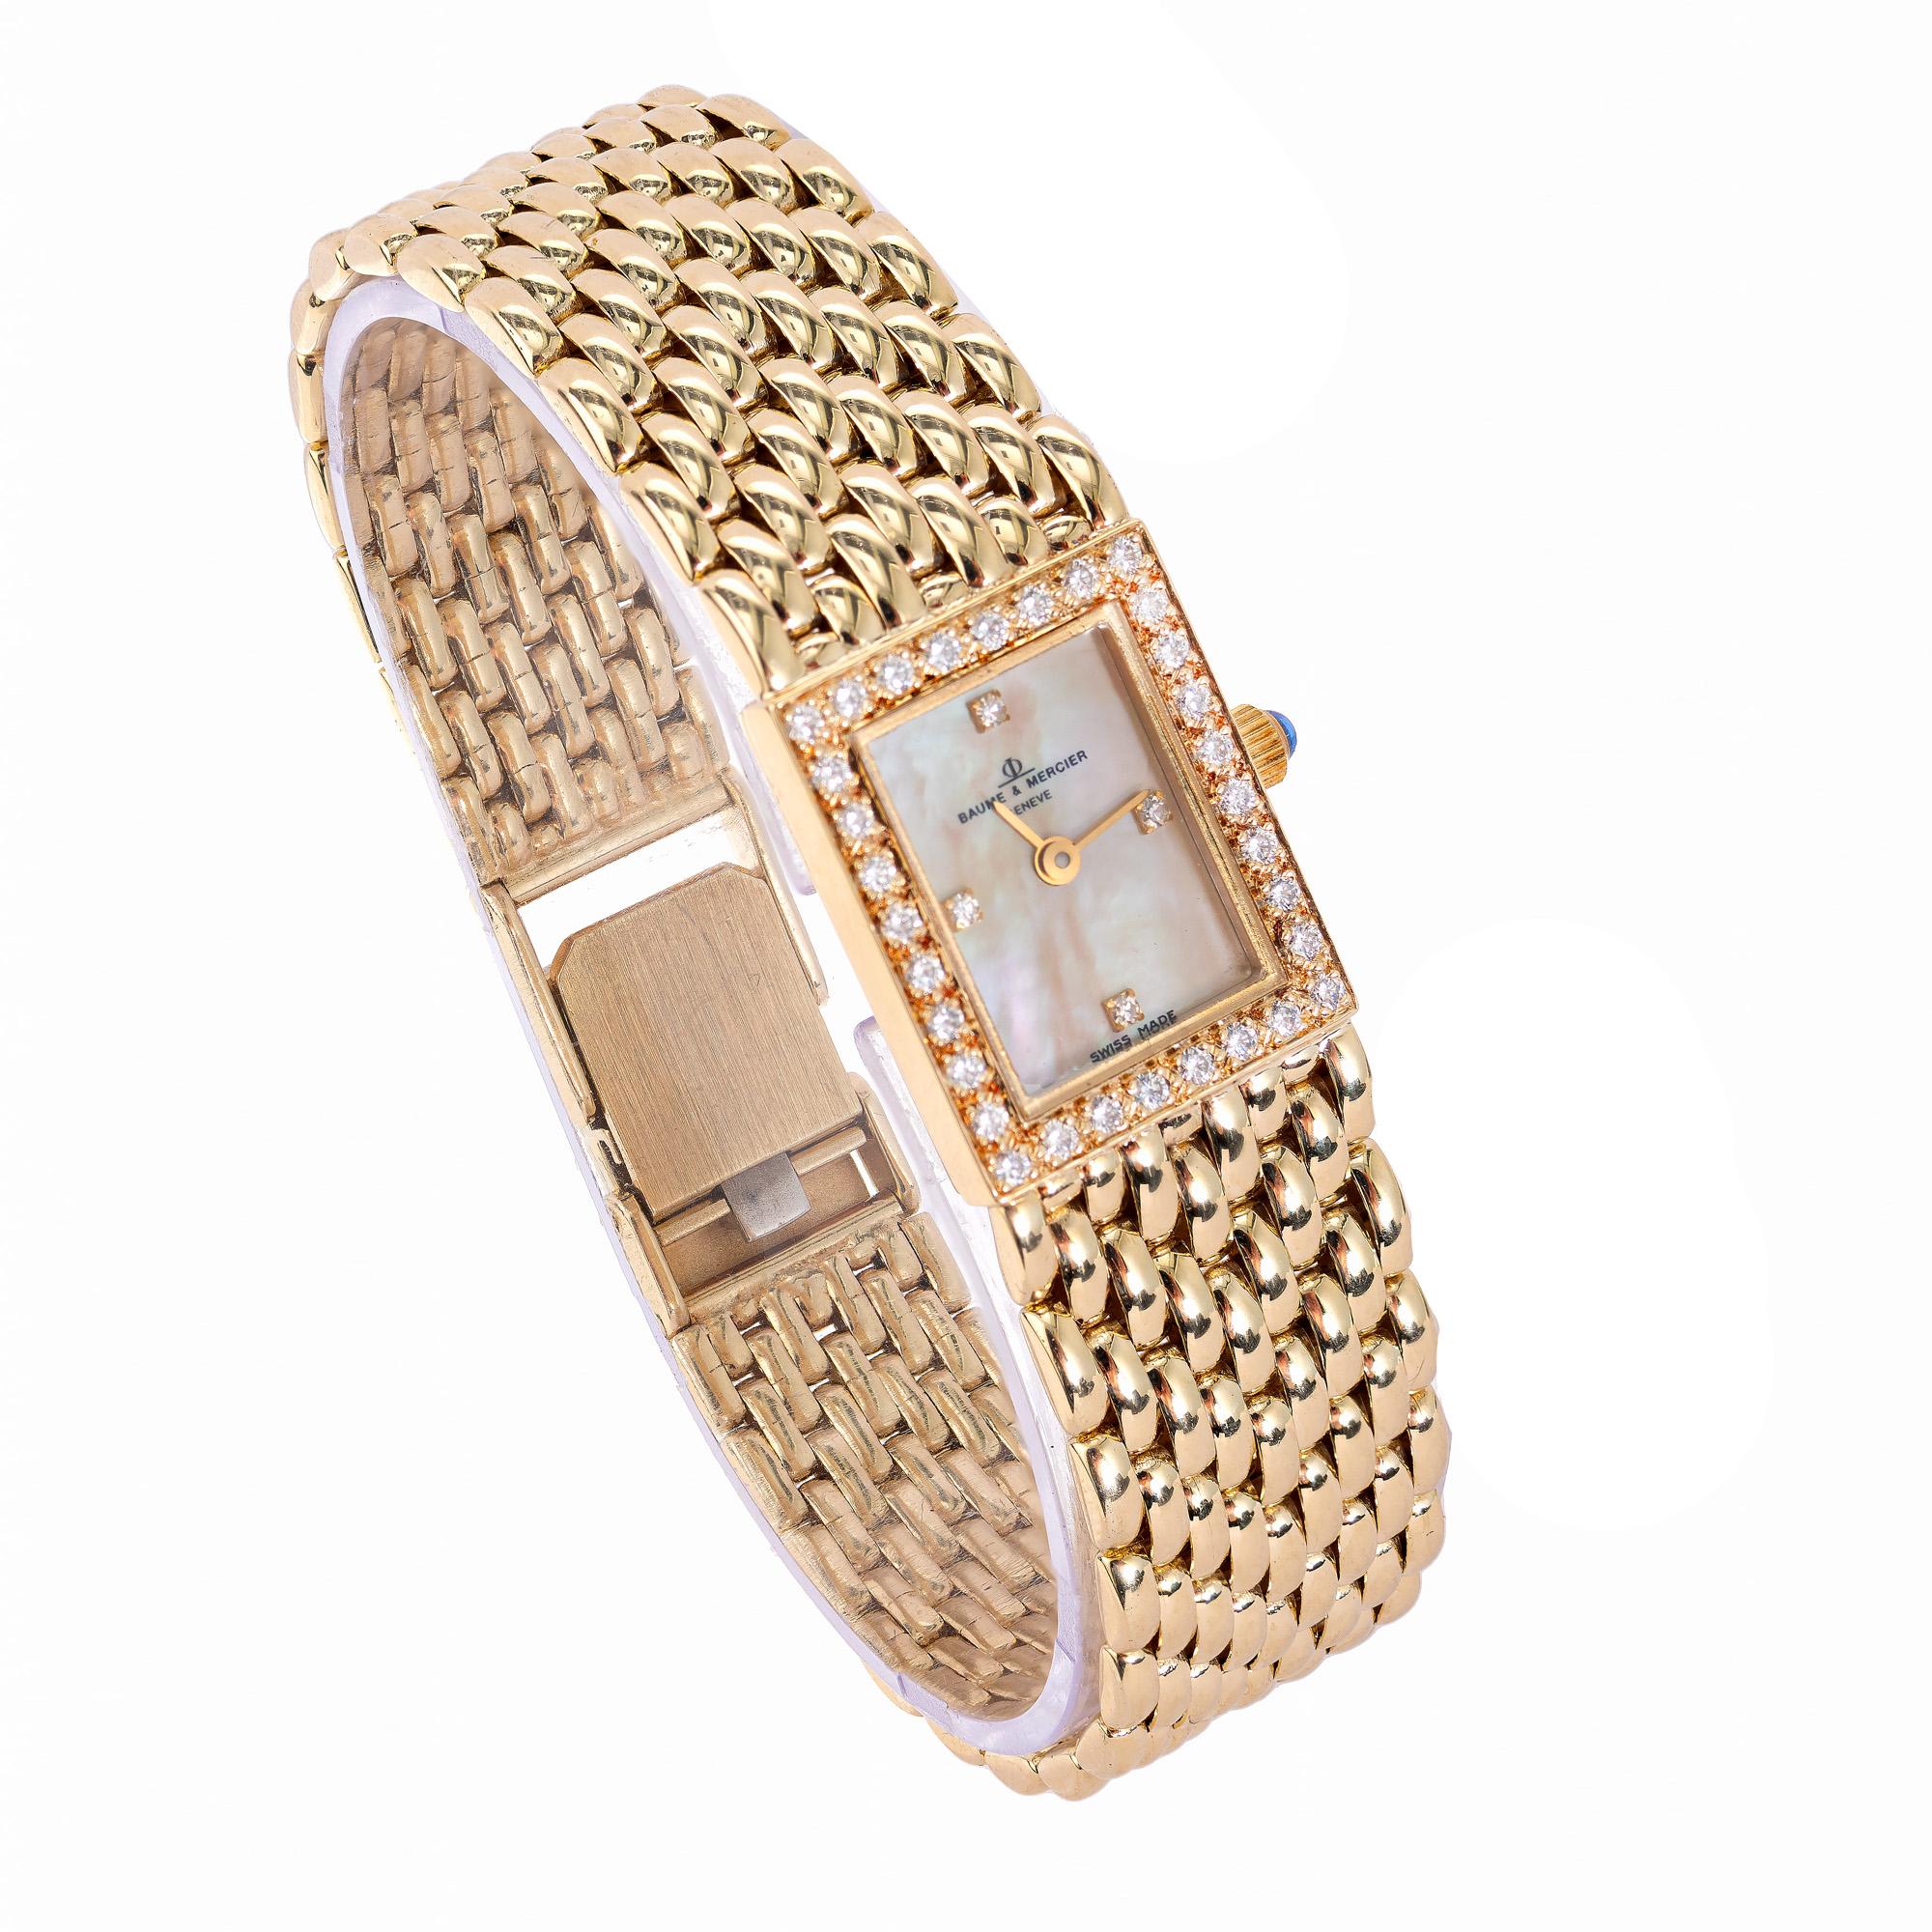 Taille ronde Baume & Mercier .17 Carat Diamond Yellow Gold Ladies Wristwatch